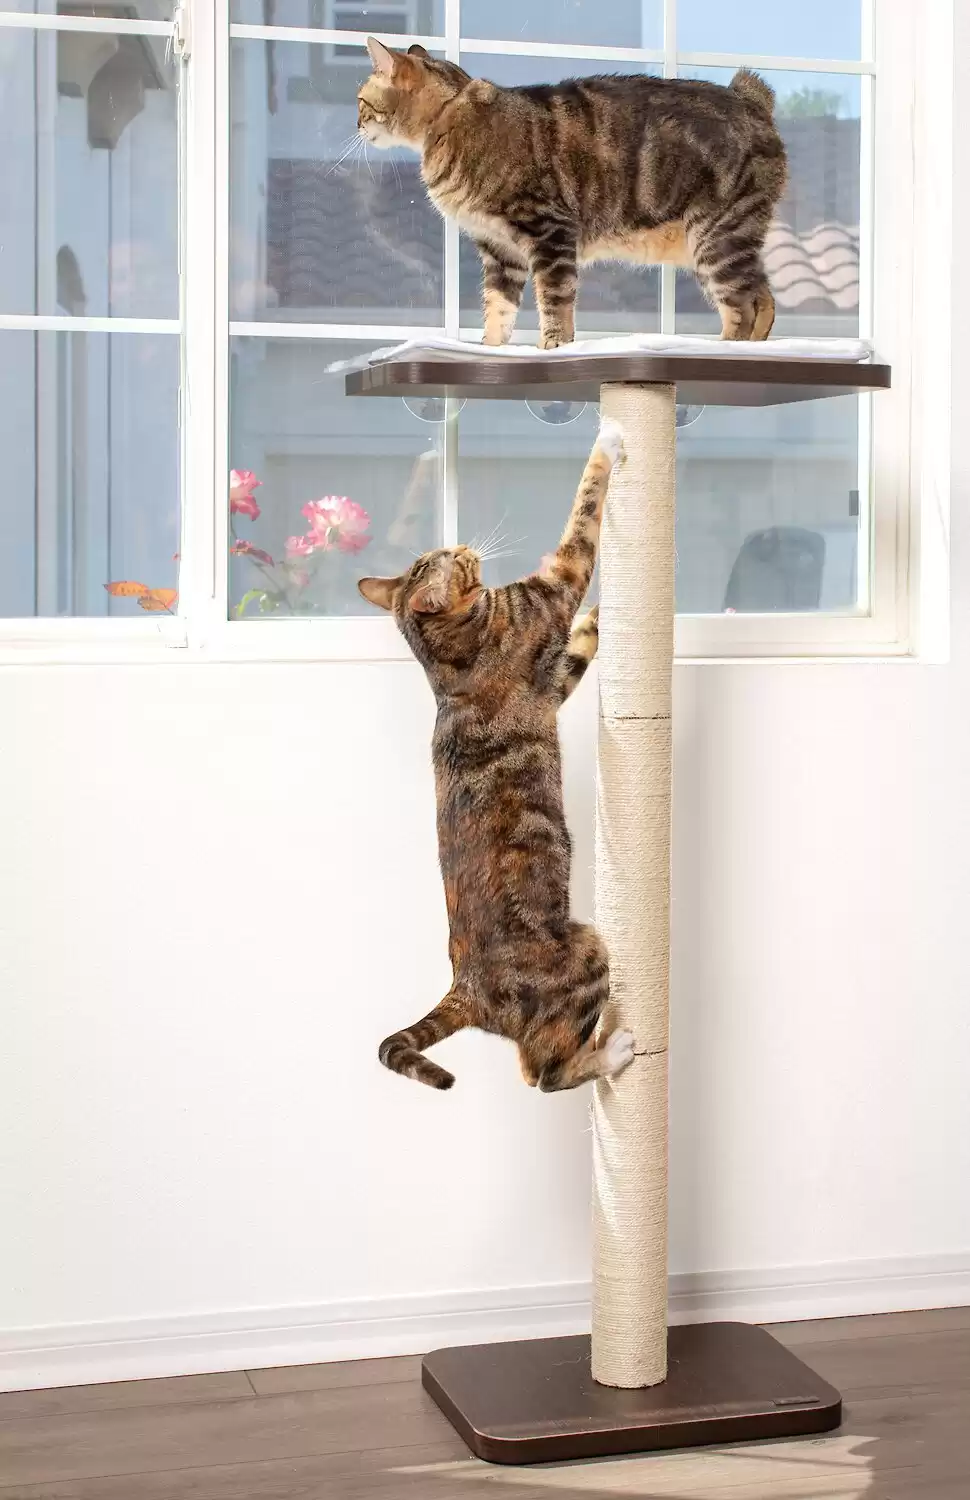 PetFusion Ultimate Window Cat Perch